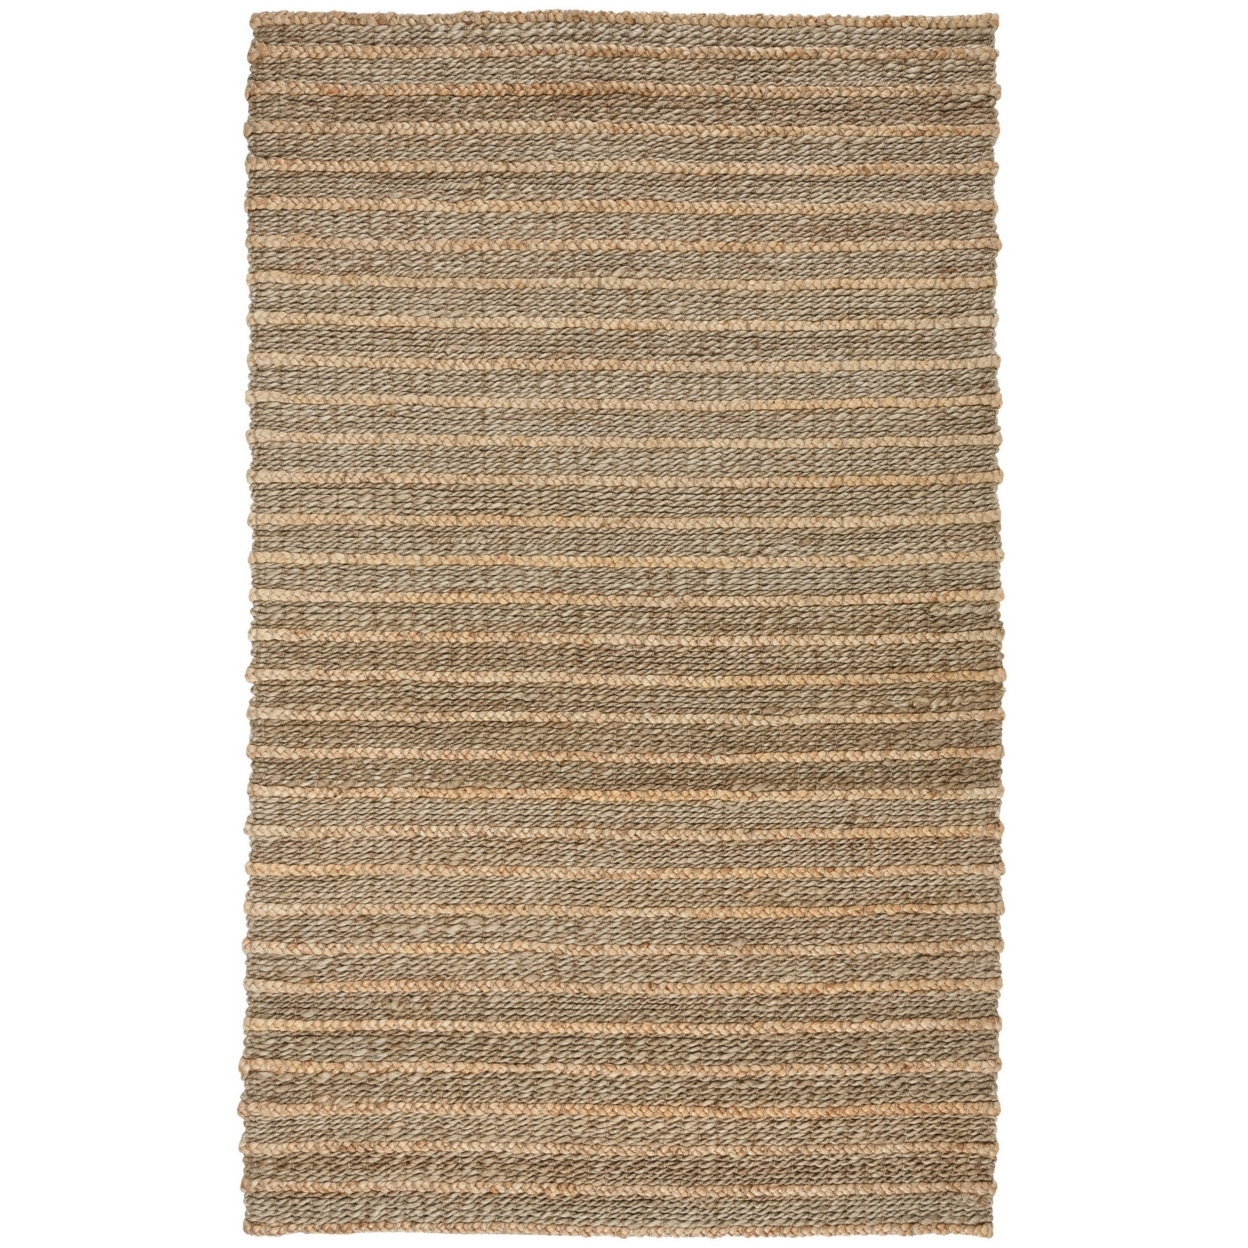 Josie 5 X 8 Area Rug, Handwoven Brown Jute, Braided And Coiled Stripes - Saltoro Sherpi